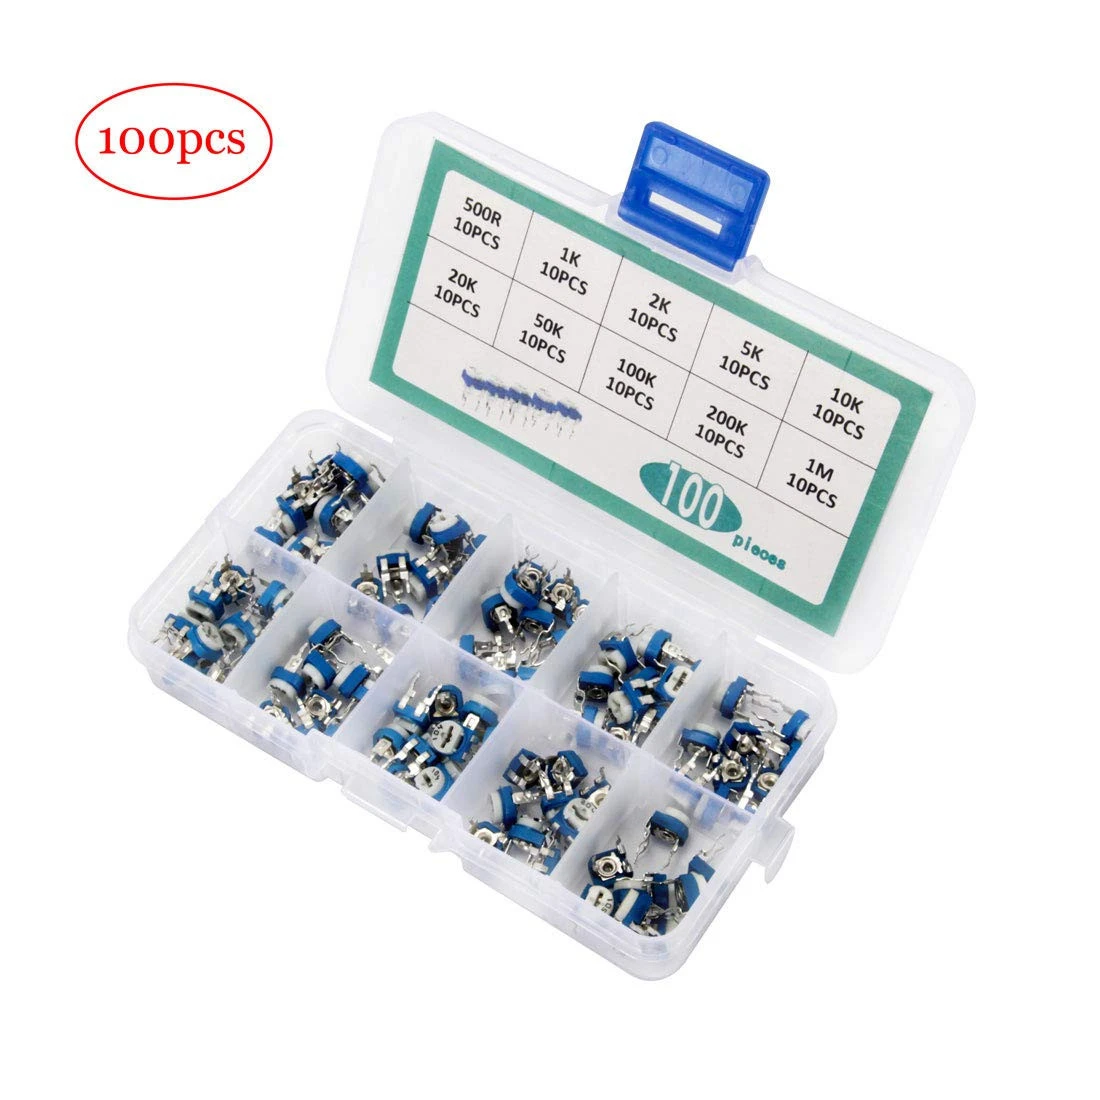 100Pcs 10 Values RM065 Preset Trim pot Trimmer Potentiometer with Variable Resistor Assorted Plastic Kit Box